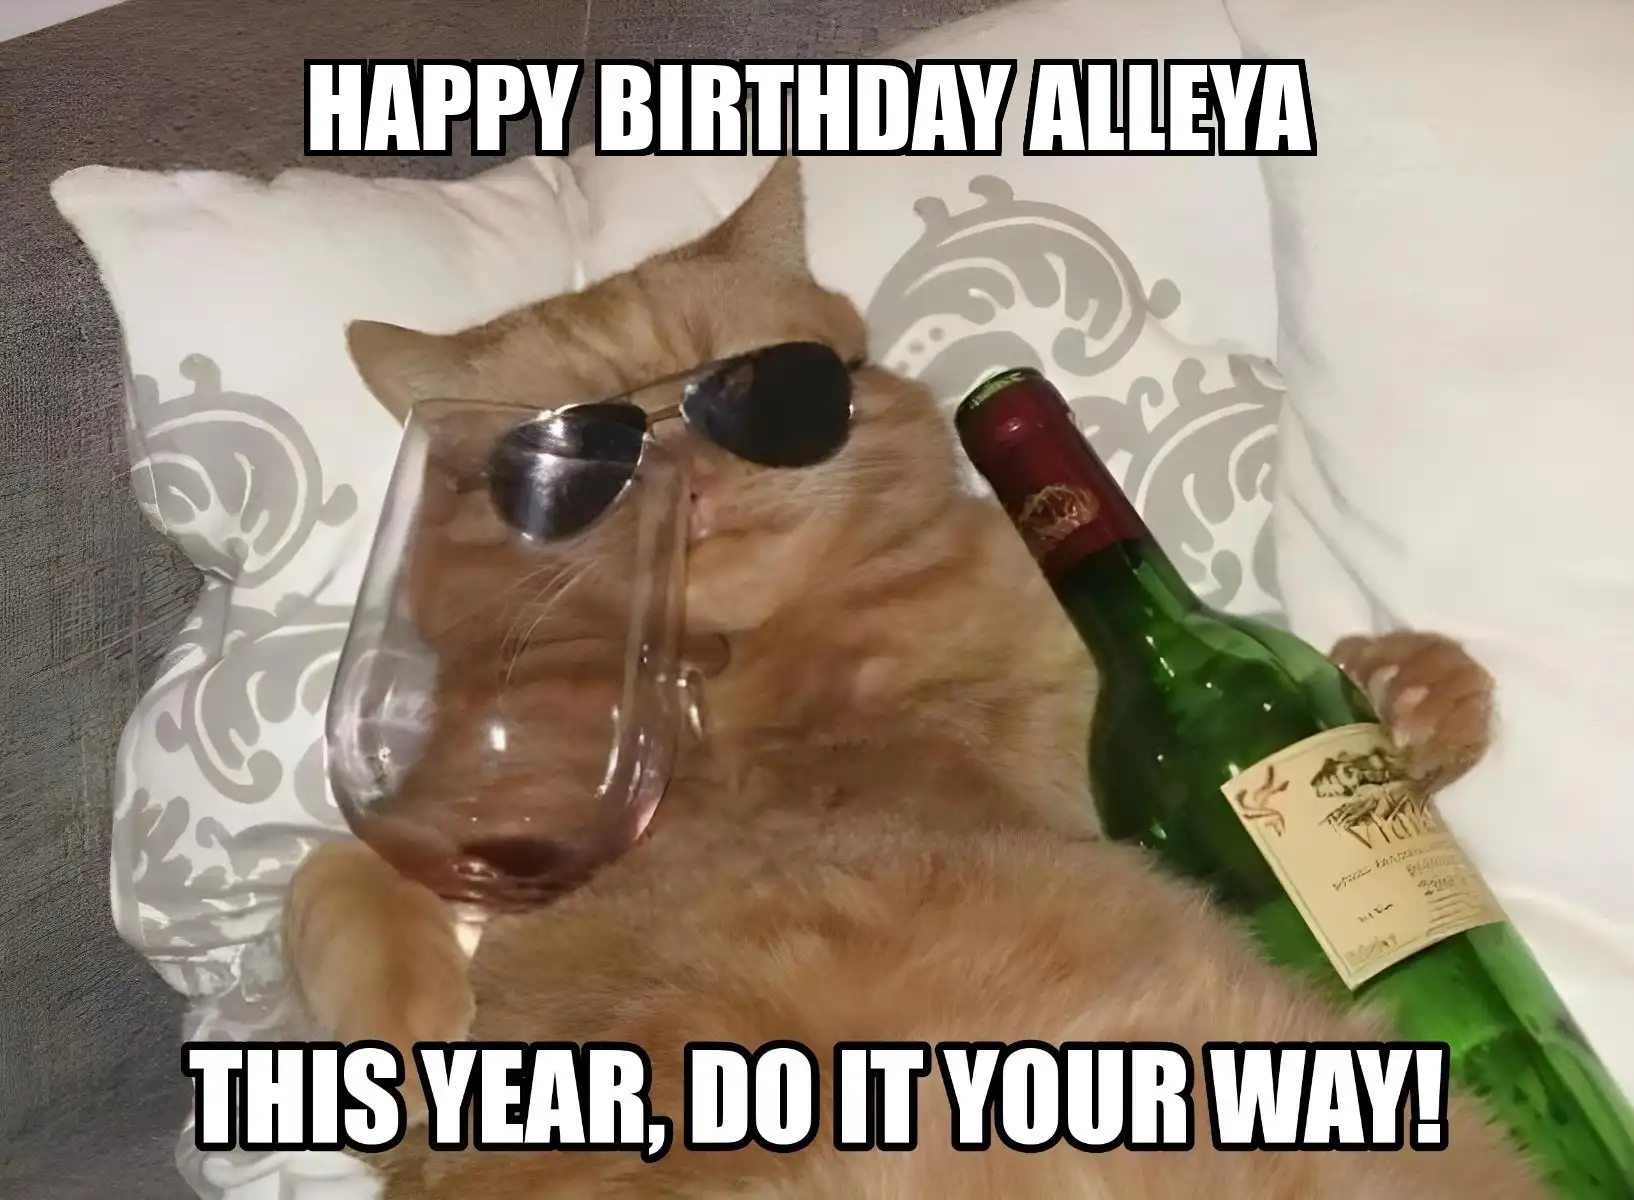 Happy Birthday Alleya This Year Do It Your Way Meme